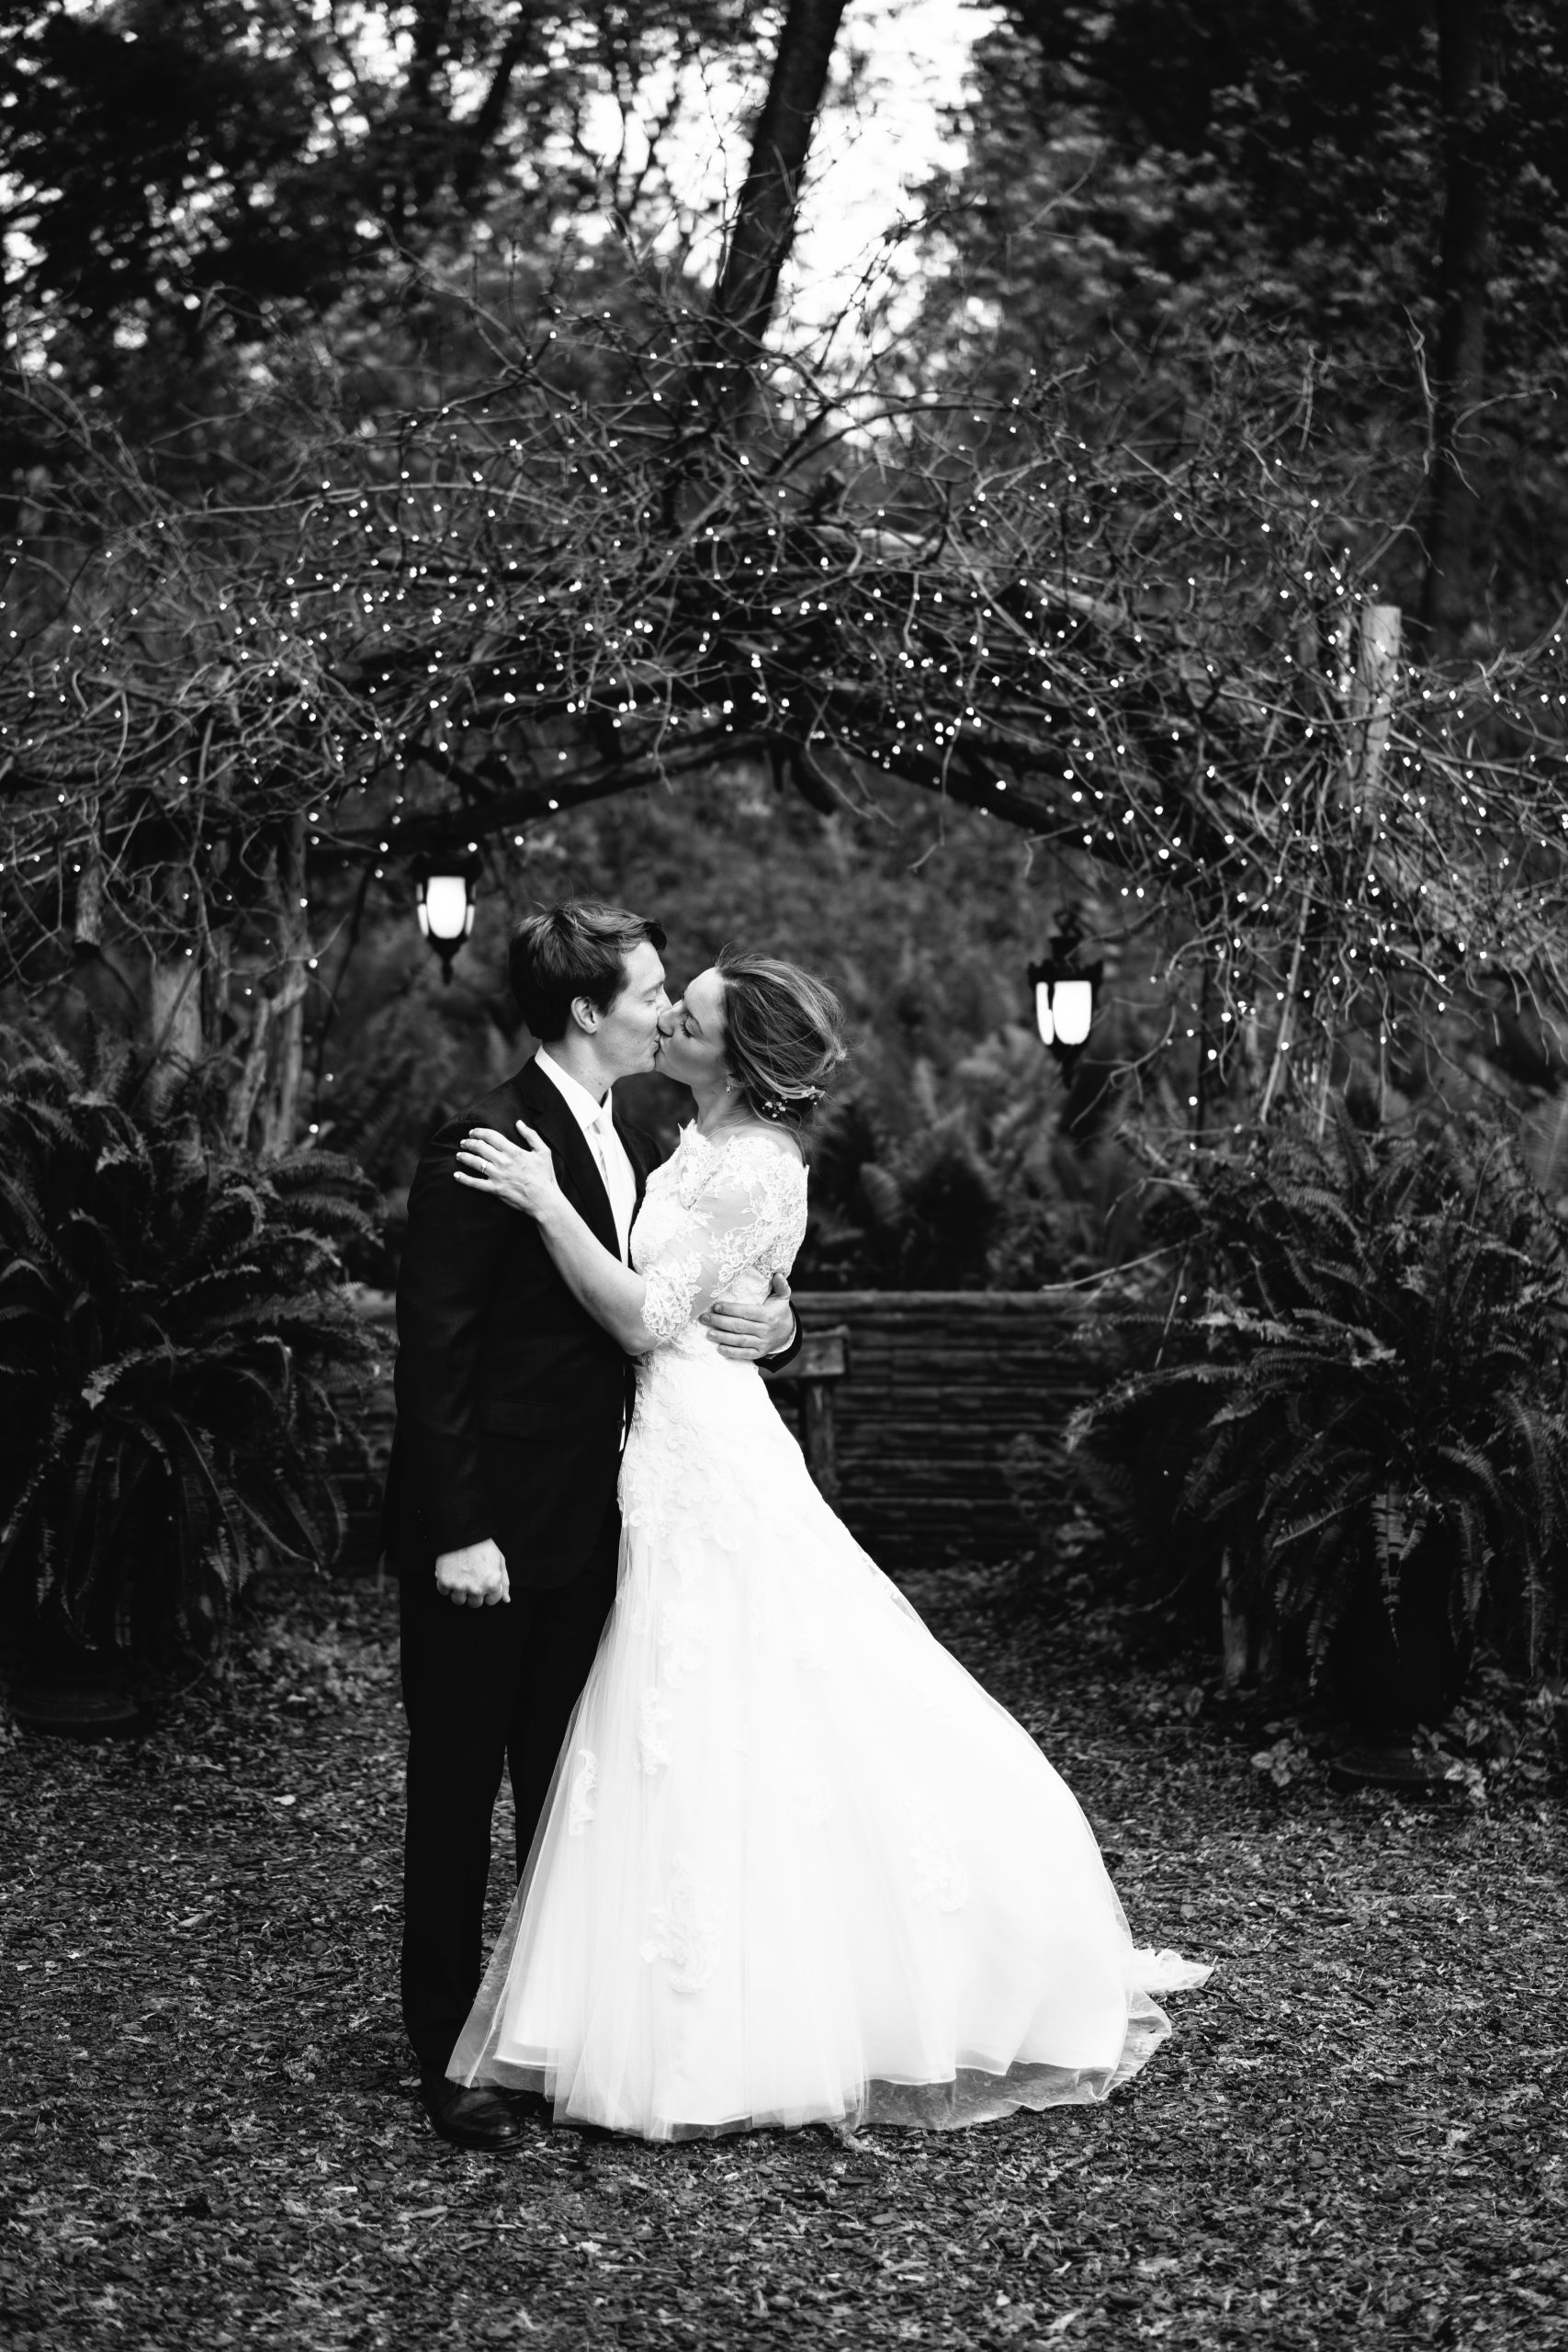 Camrose Hill - Outdoor Wedding Venue and Florist